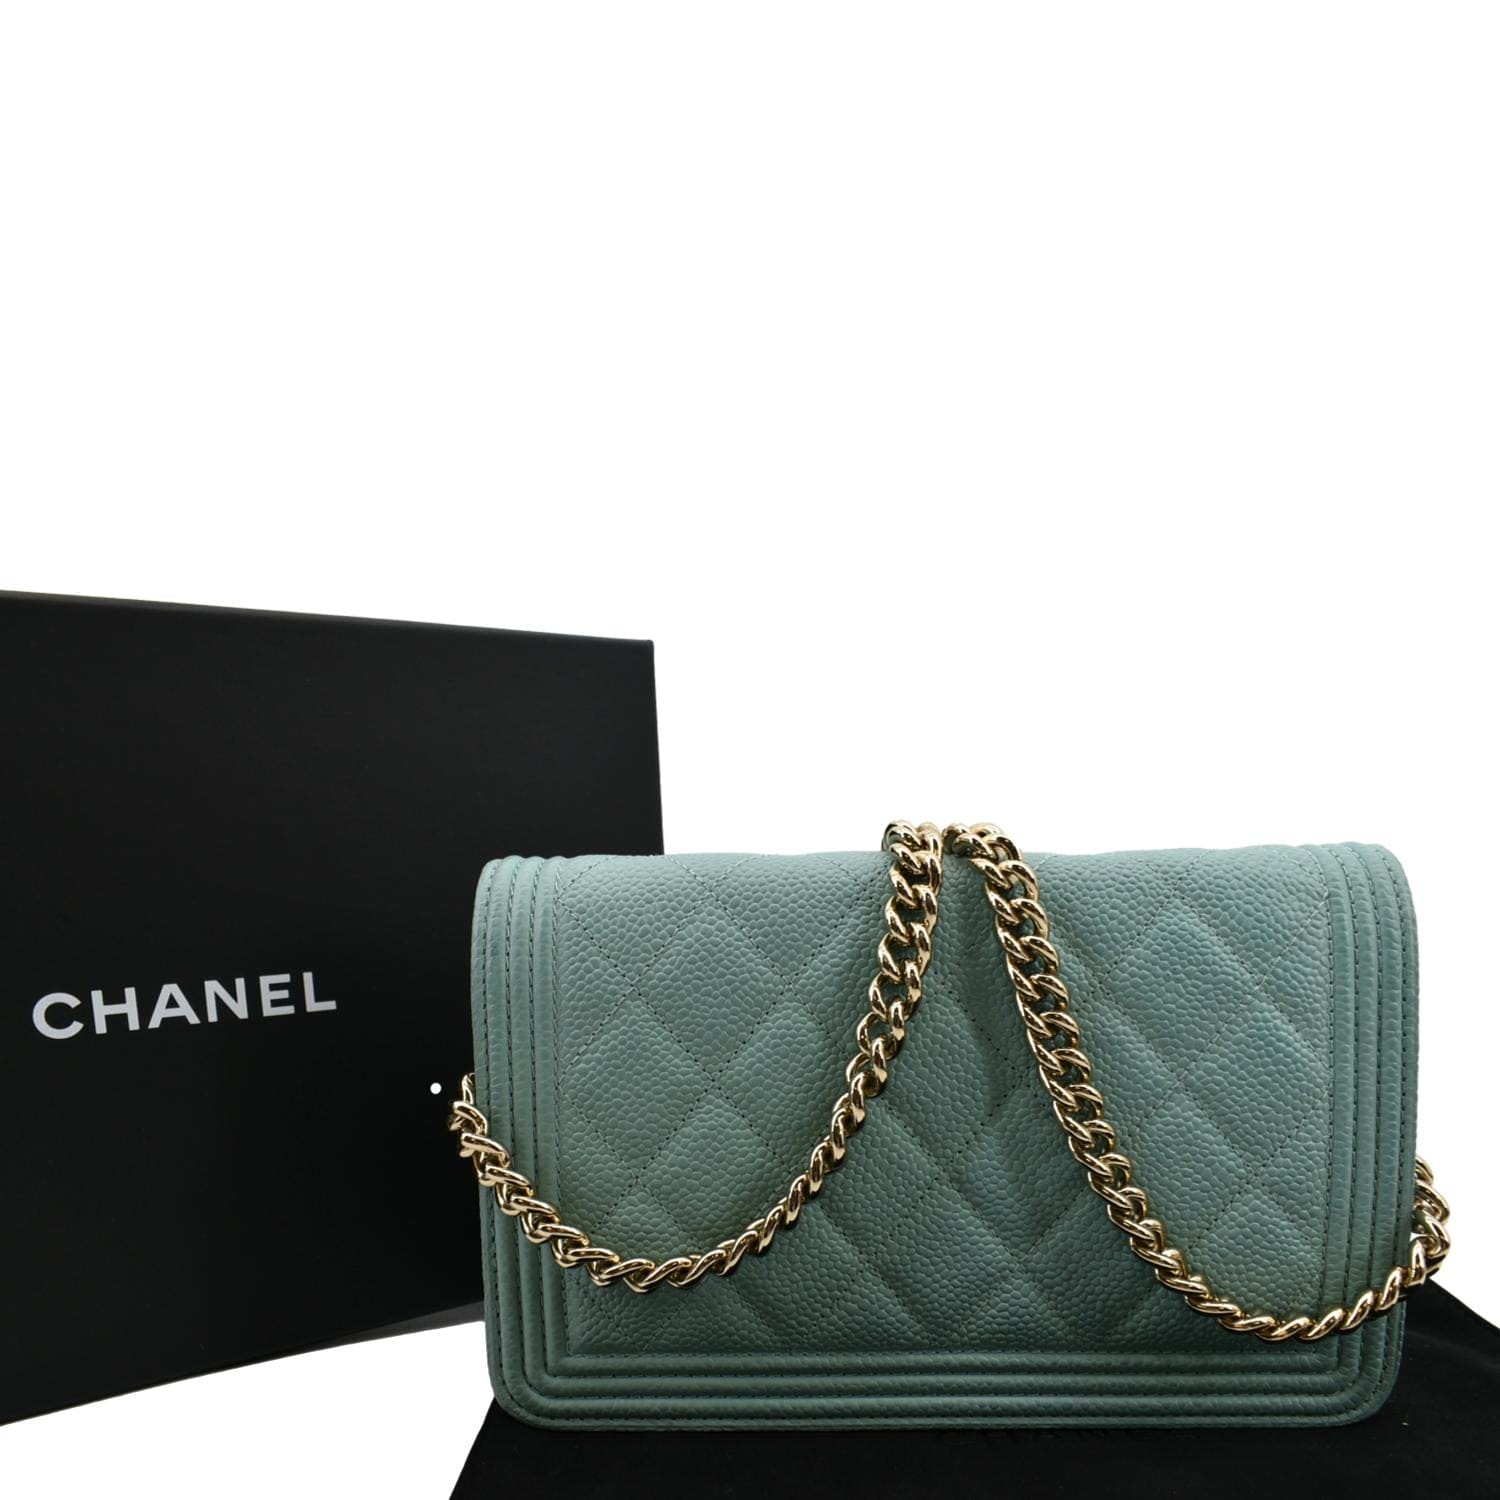 Chanel Chanel Mini Boy O-Case Pouch - Black Clutches, Handbags